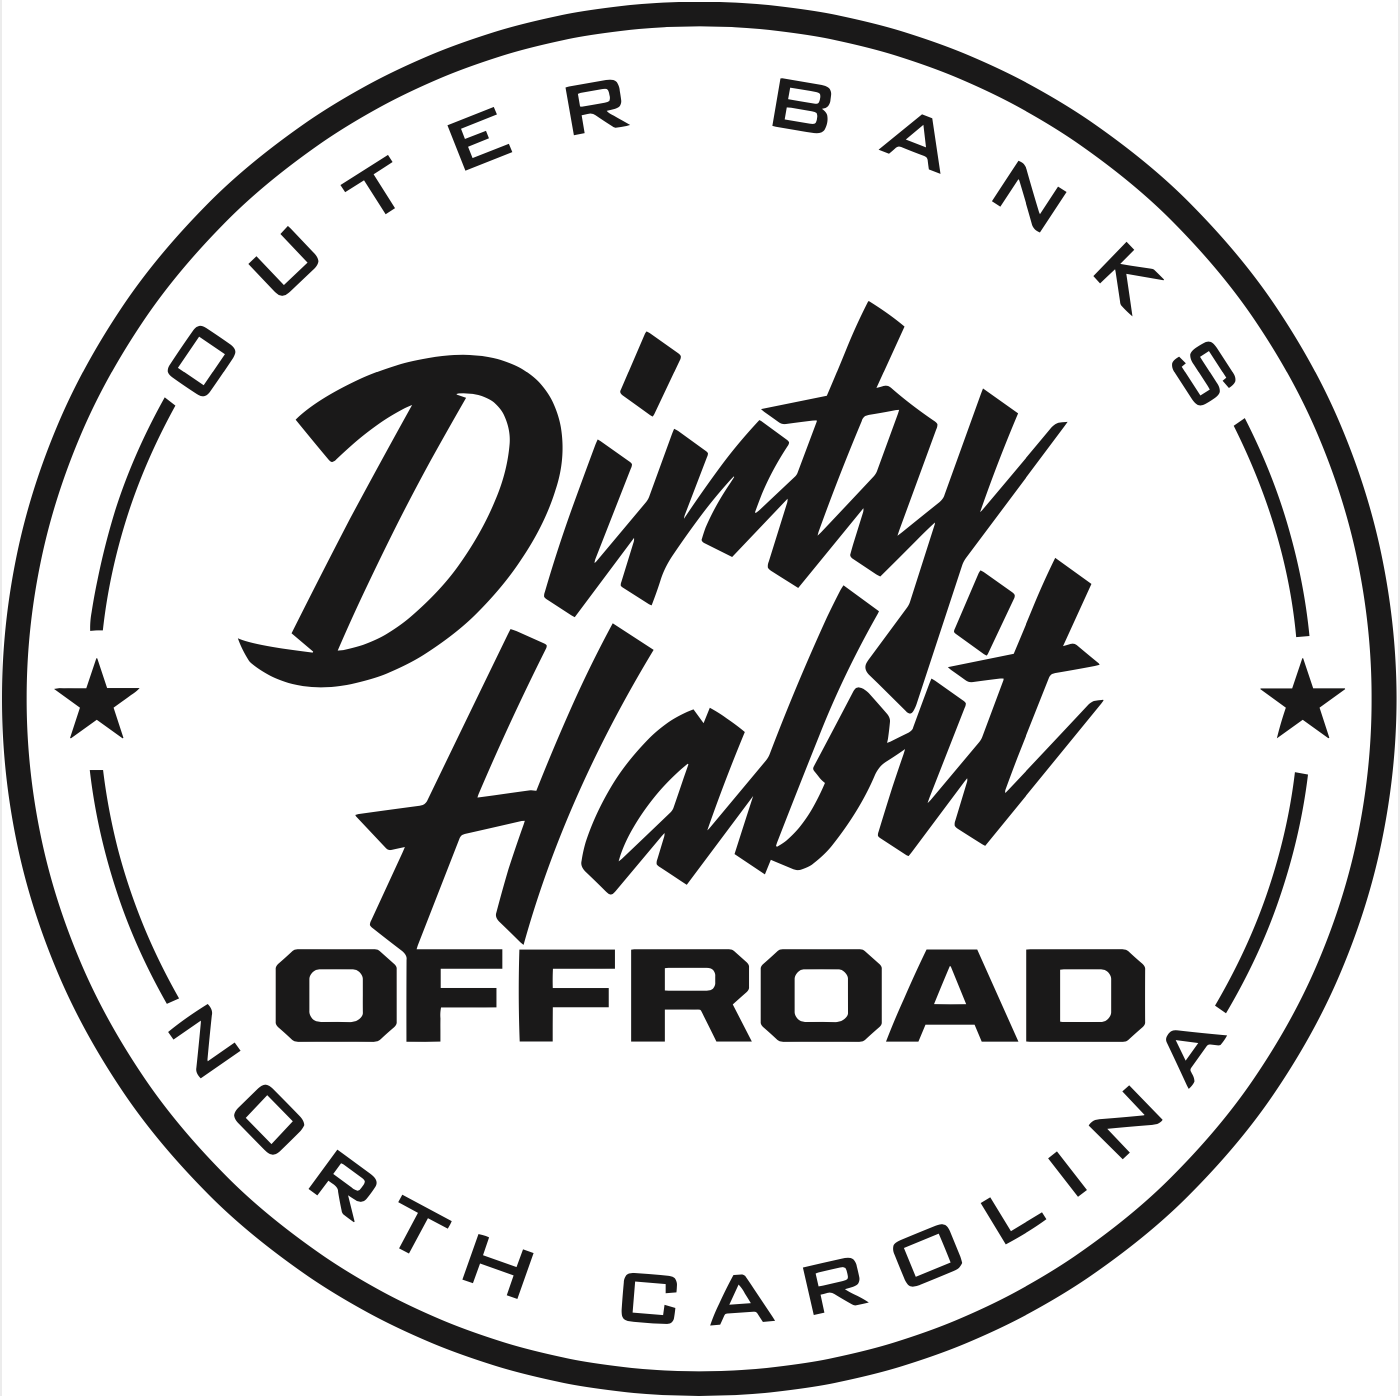 Dirty Habit Offroad